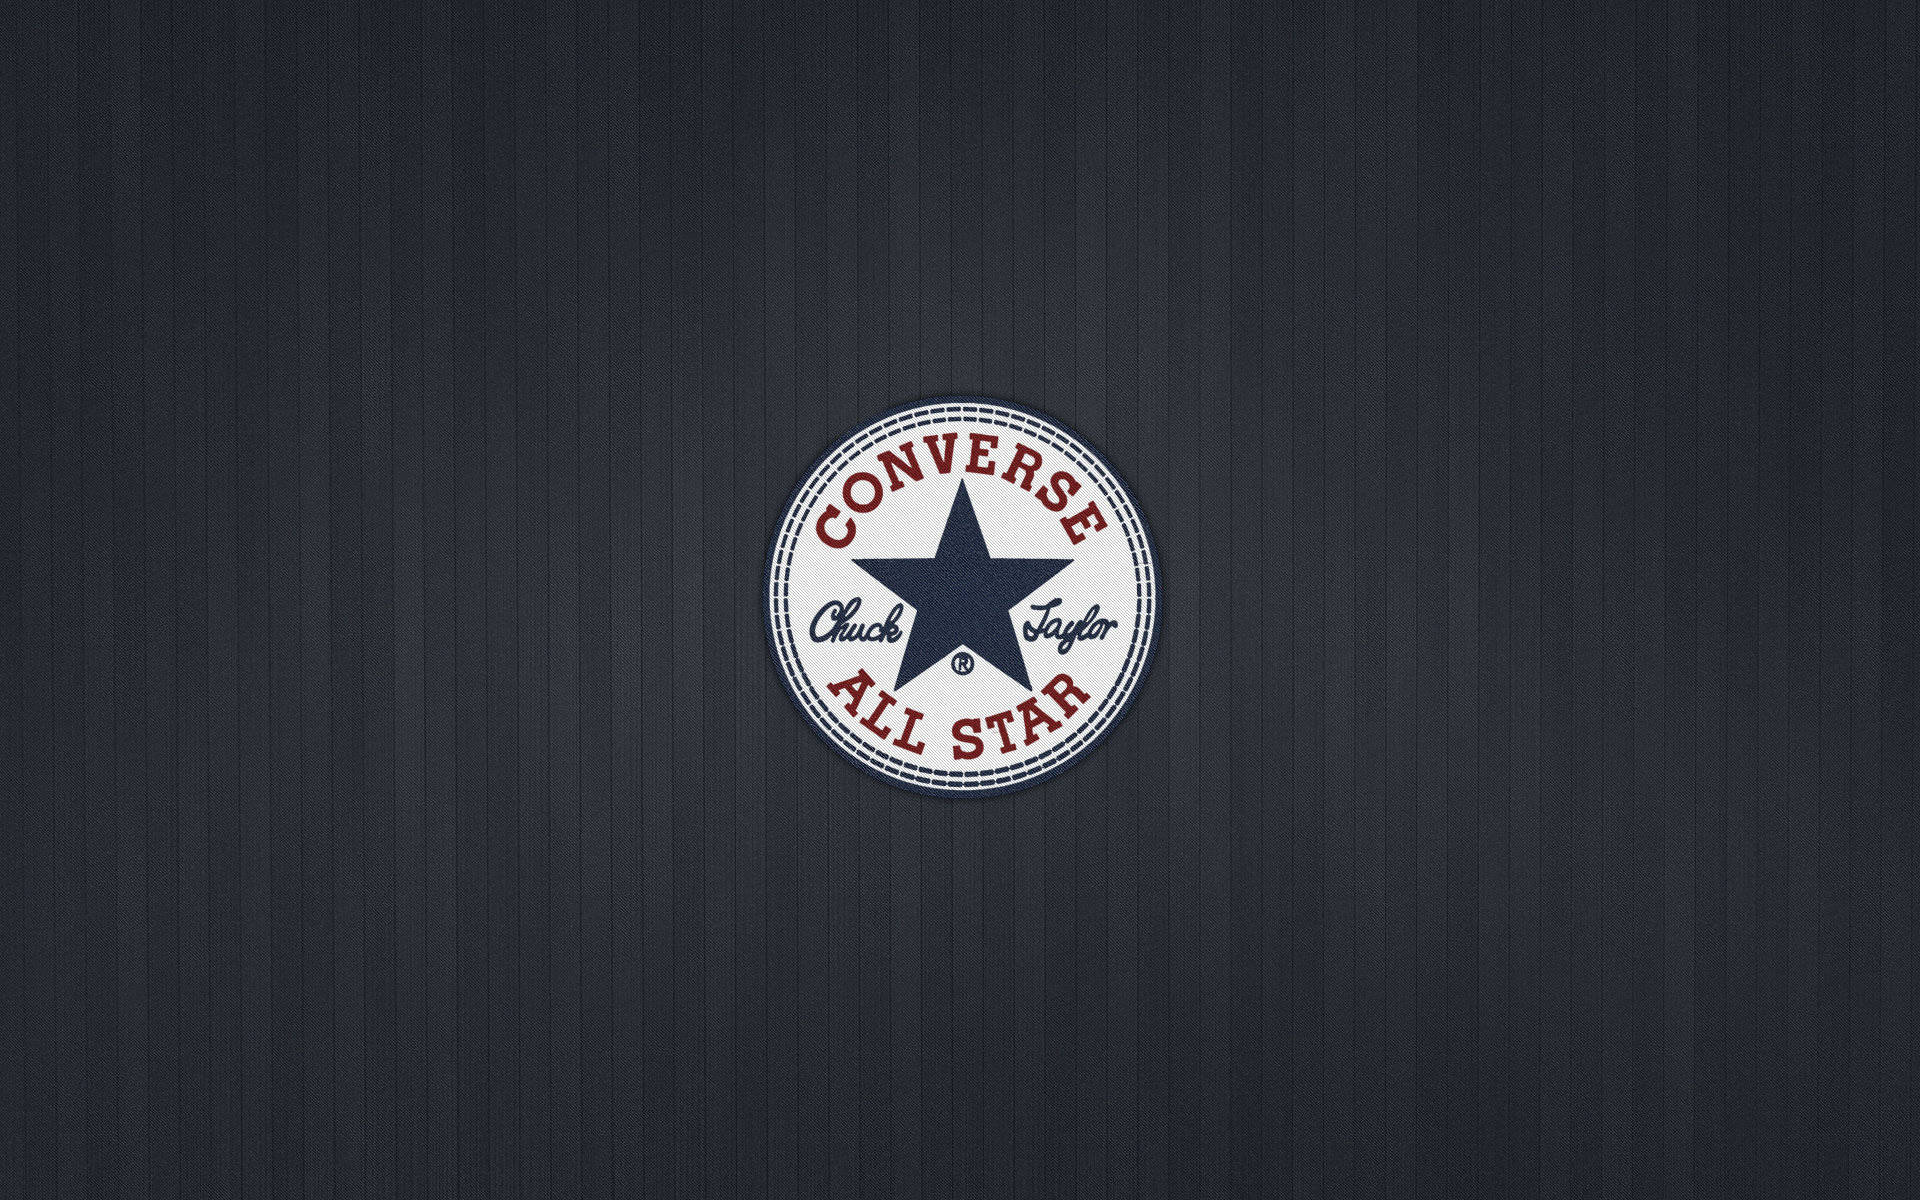 Diseñode Madera Del Logo De Converse. Fondo de pantalla